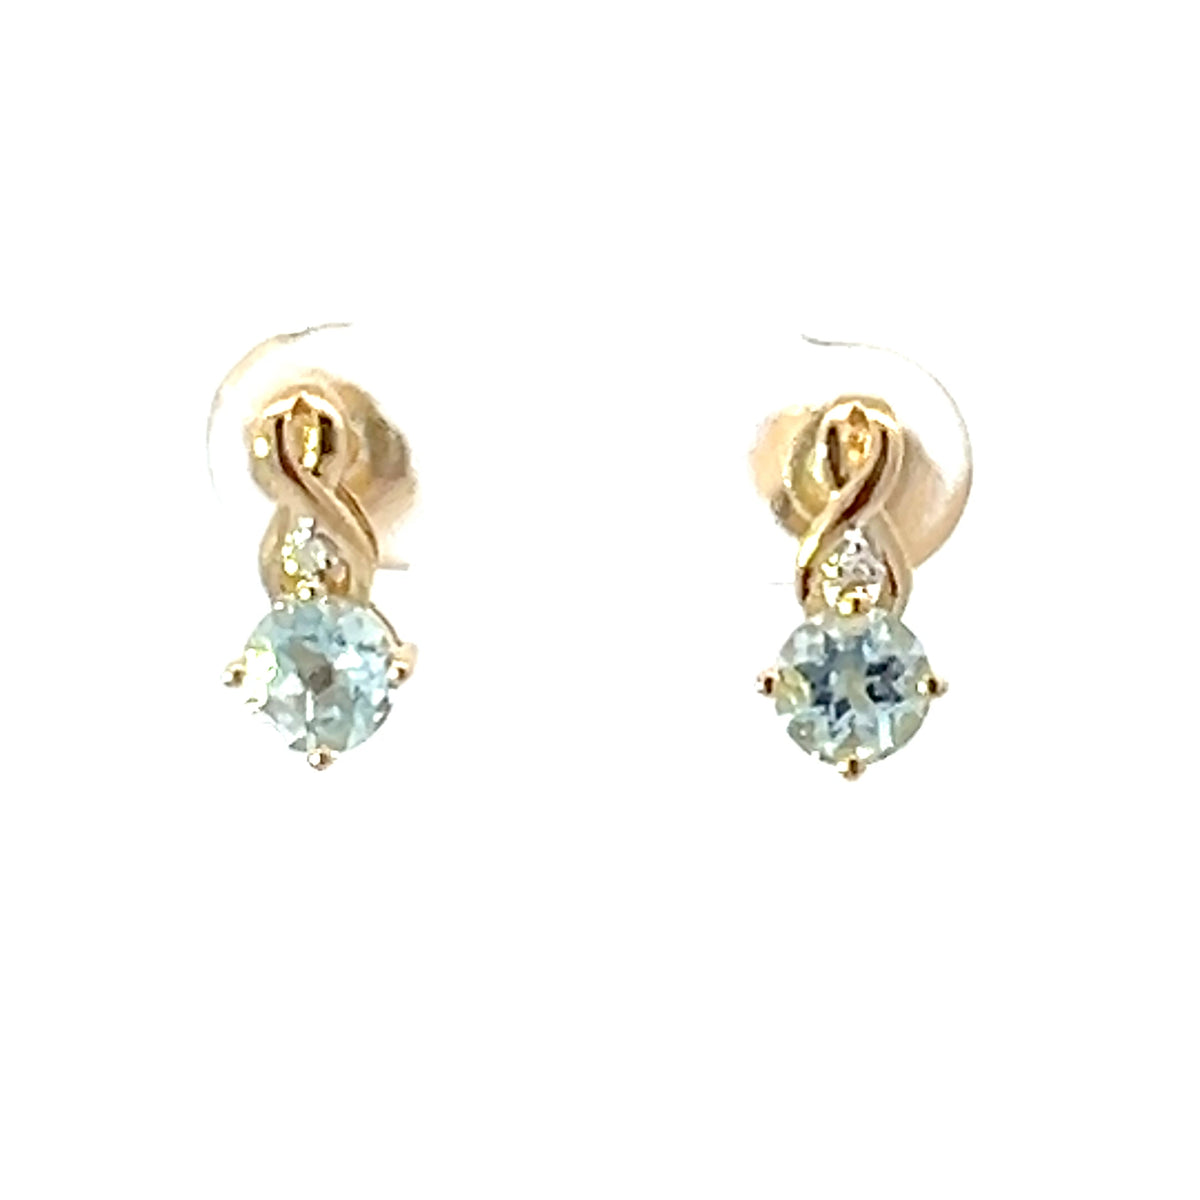 10K Yellow Gold Diamond and Aquamarine Earrings